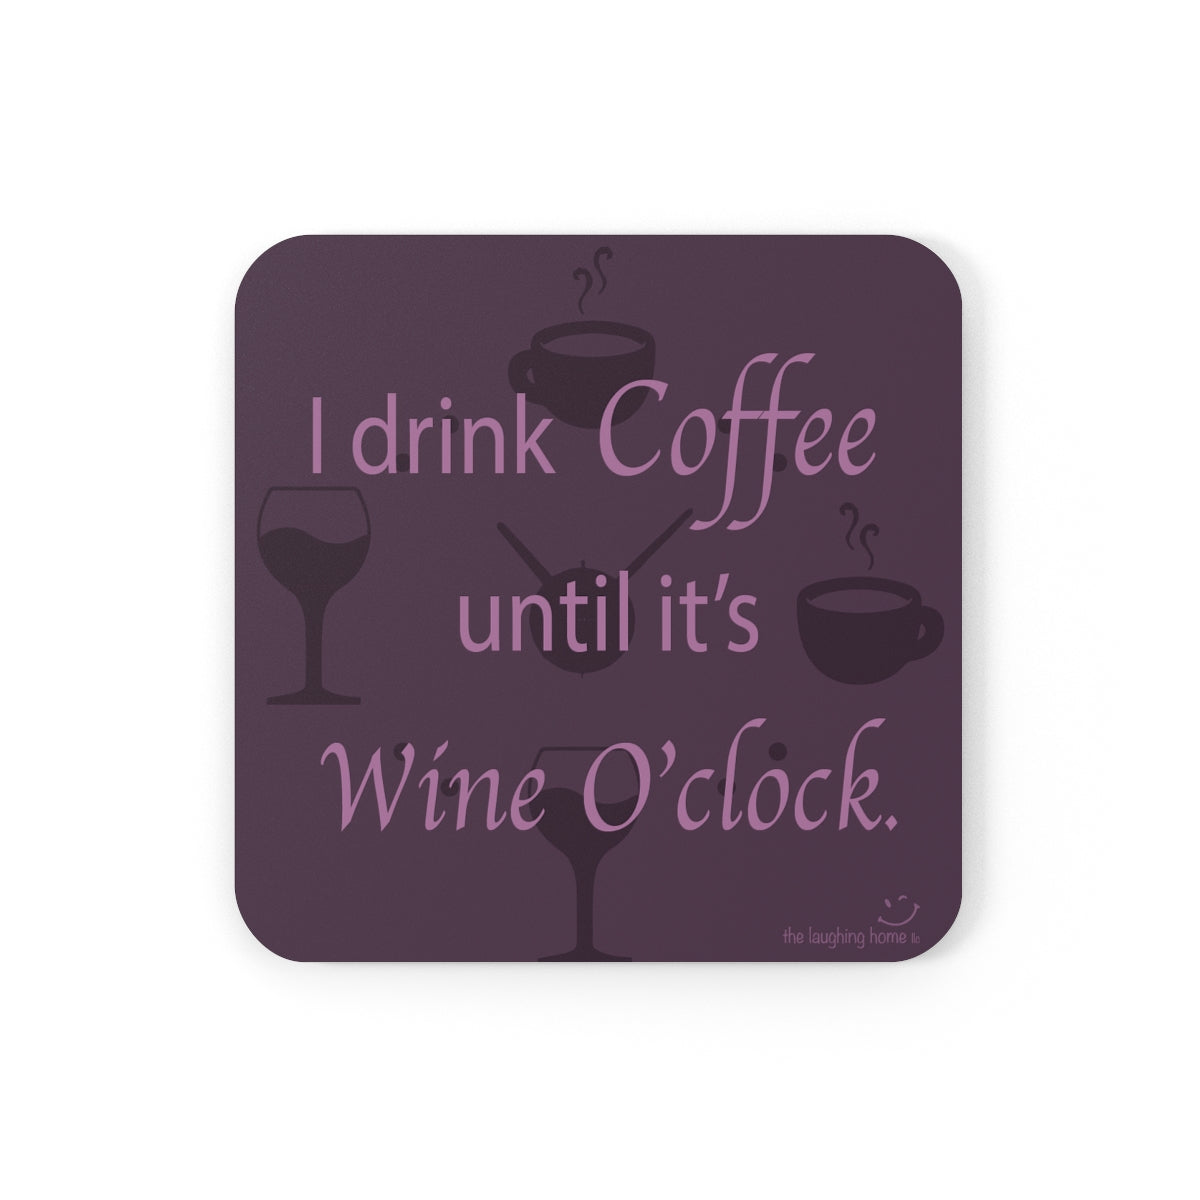 Coffee Until Wine Corkwood Coaster Set of 4